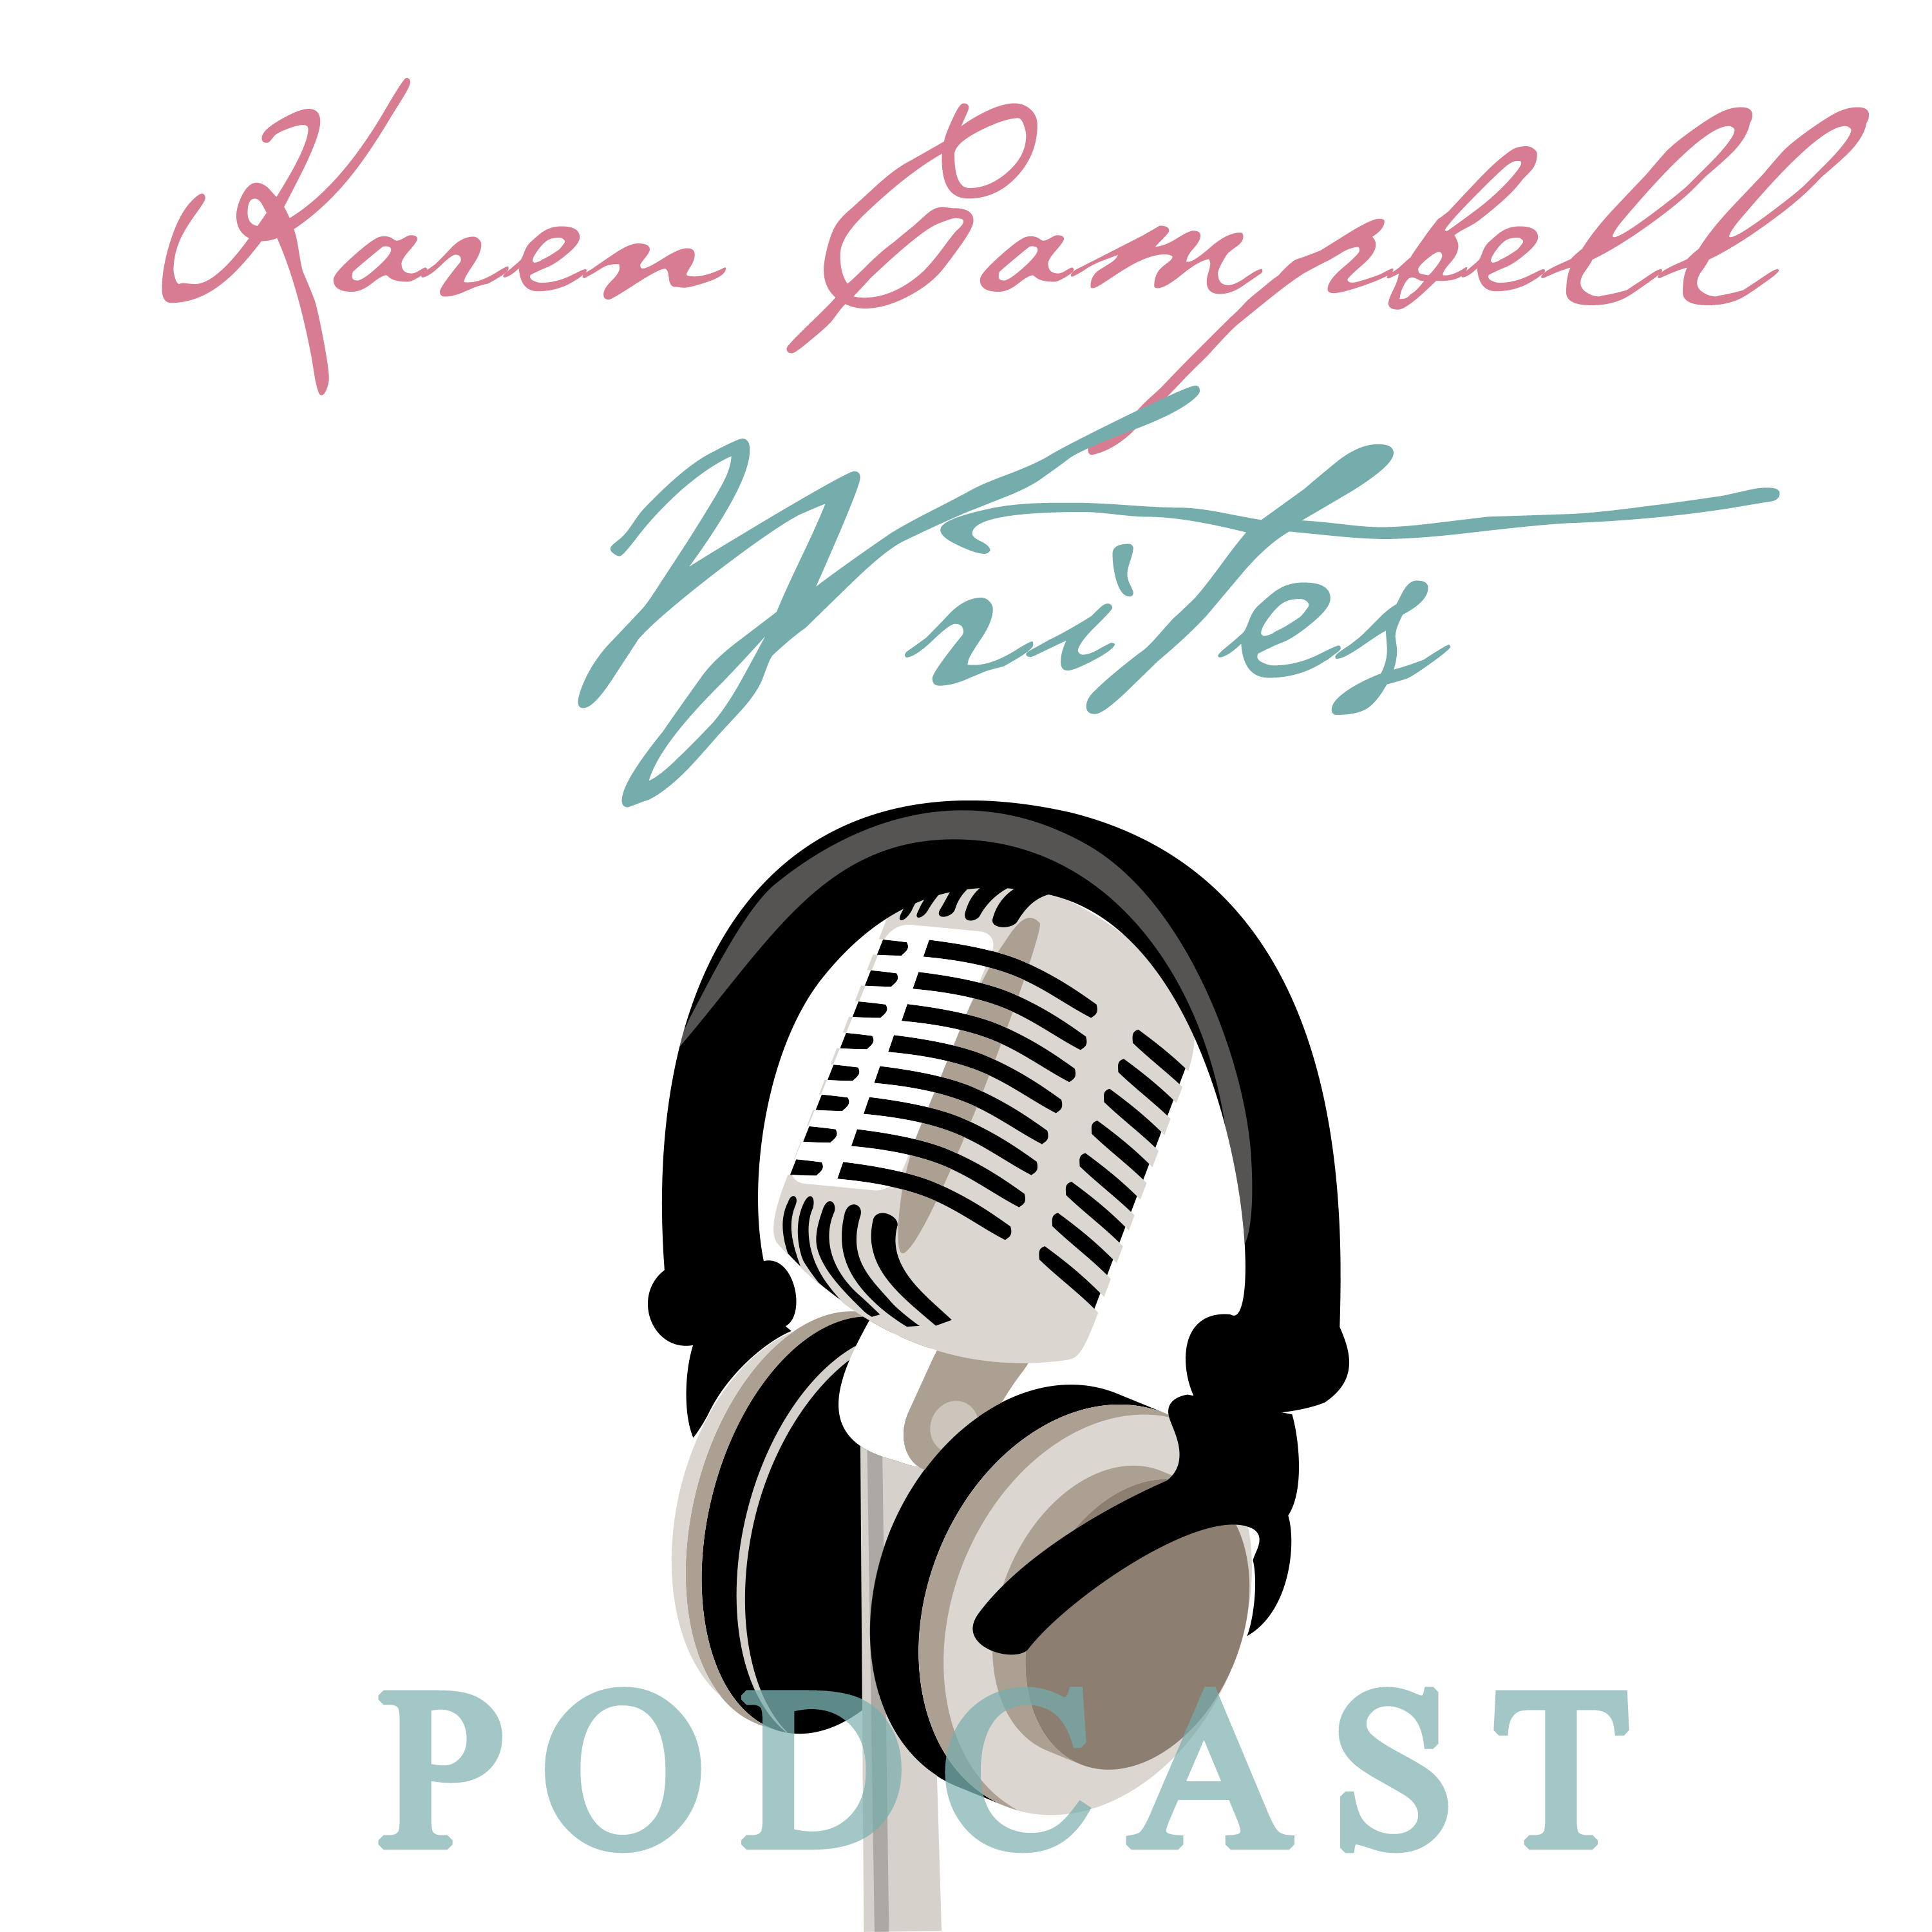 Karen Campbell Writes Podcast